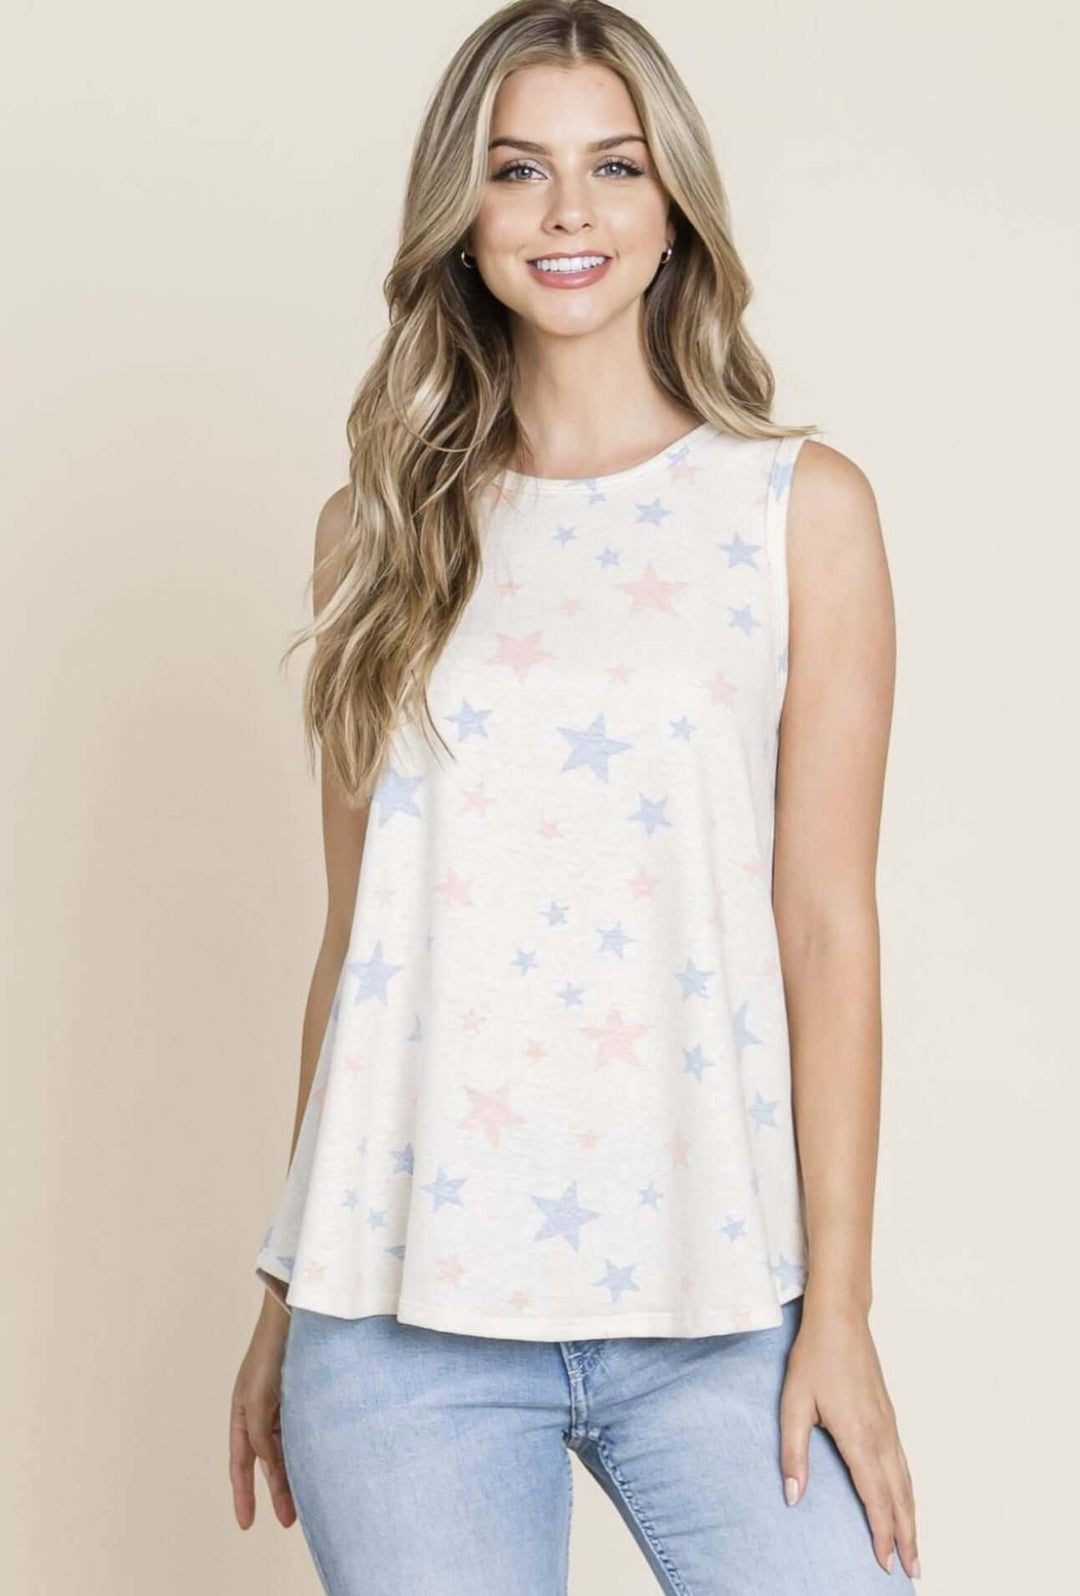 Women's Summer Sleeveless Top Pastel Star Print Made in USA